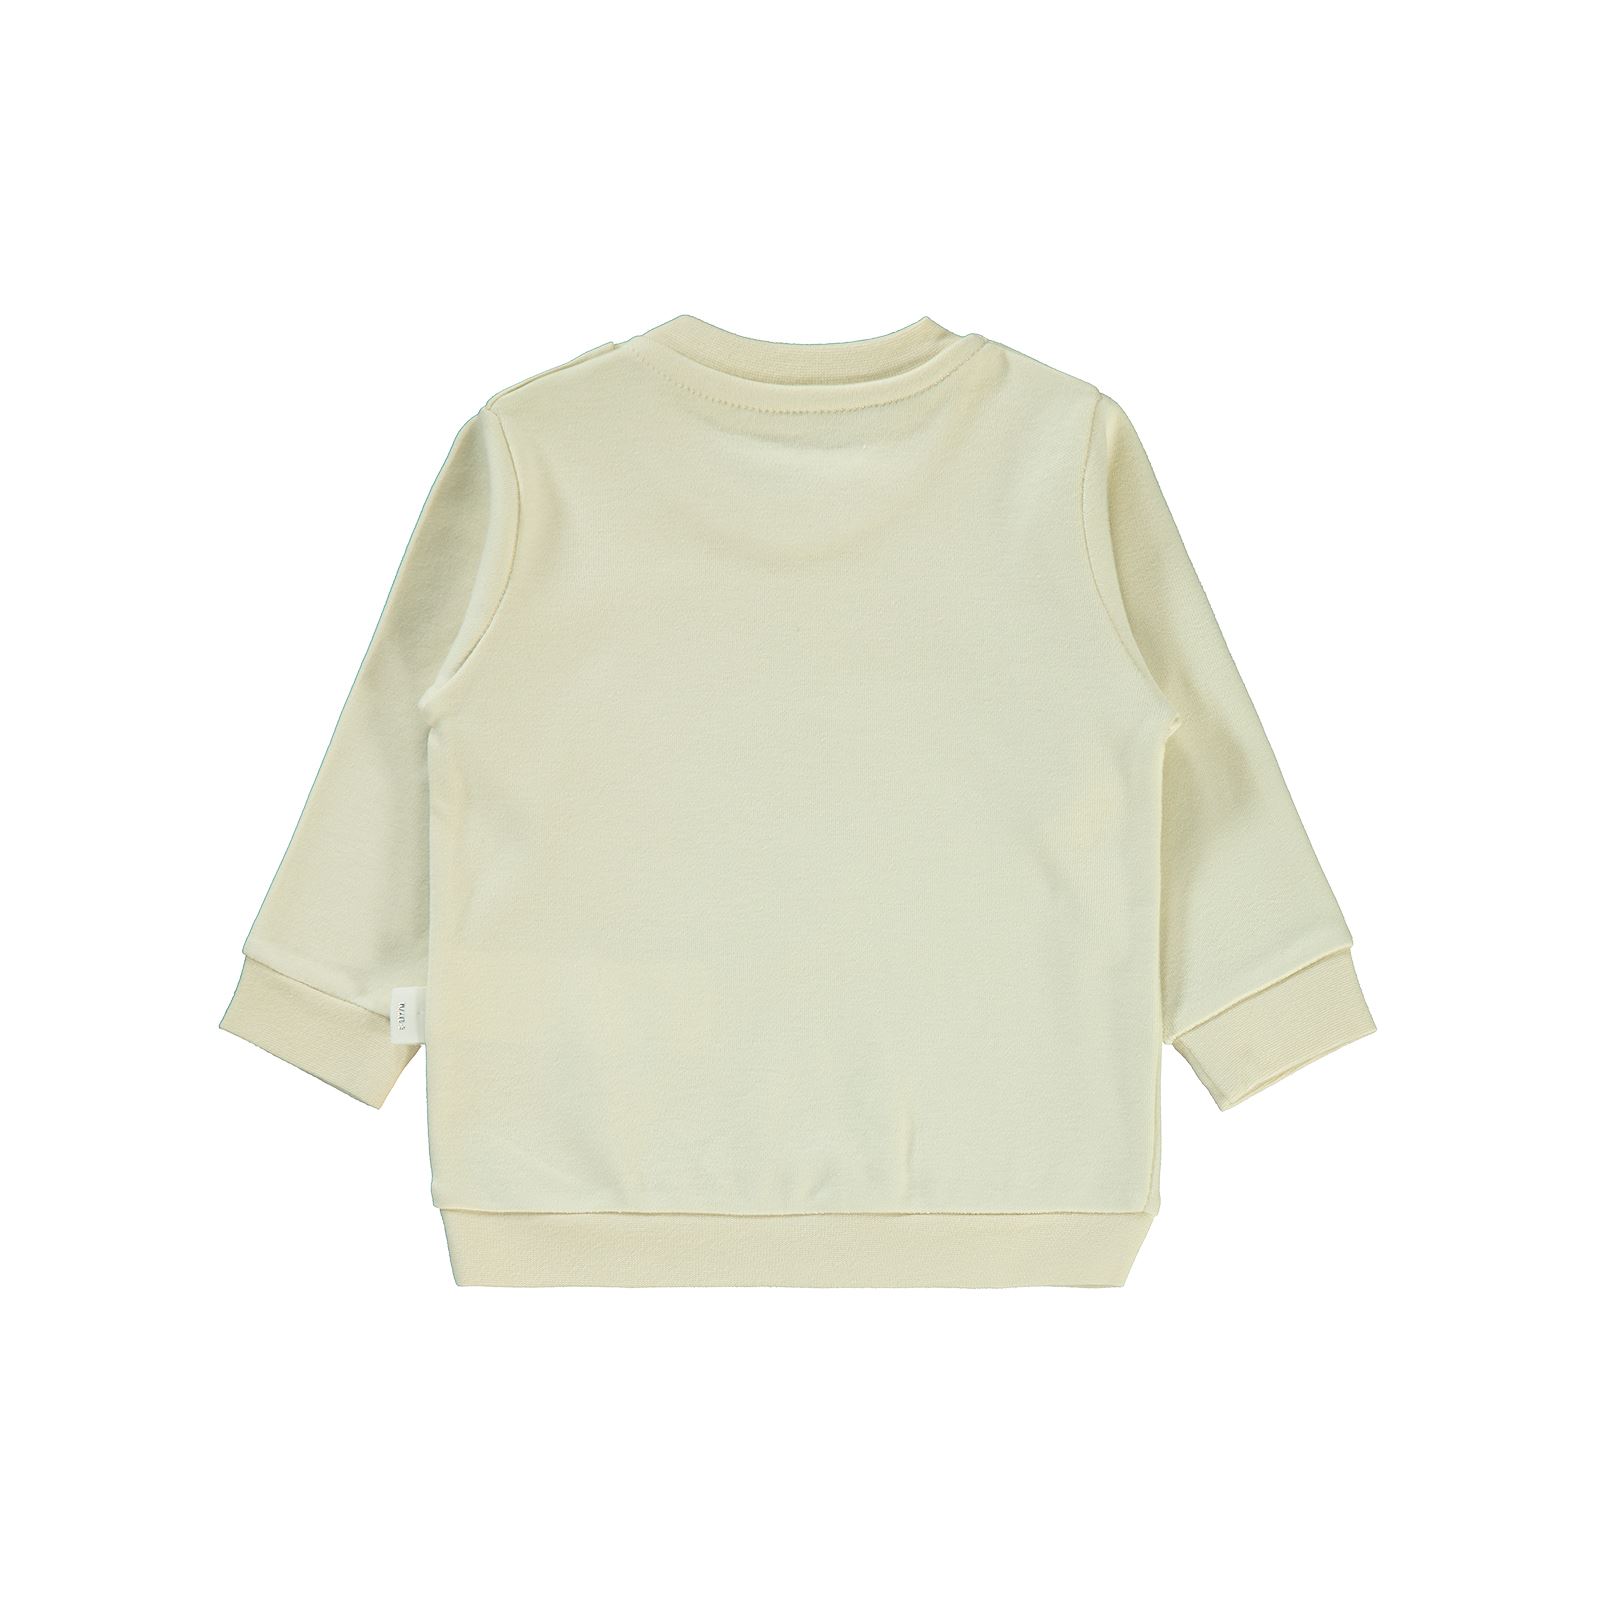 Civil Baby Erkek Bebek Sweatshirt 6-18 Ay Taş Rengi Sarısı